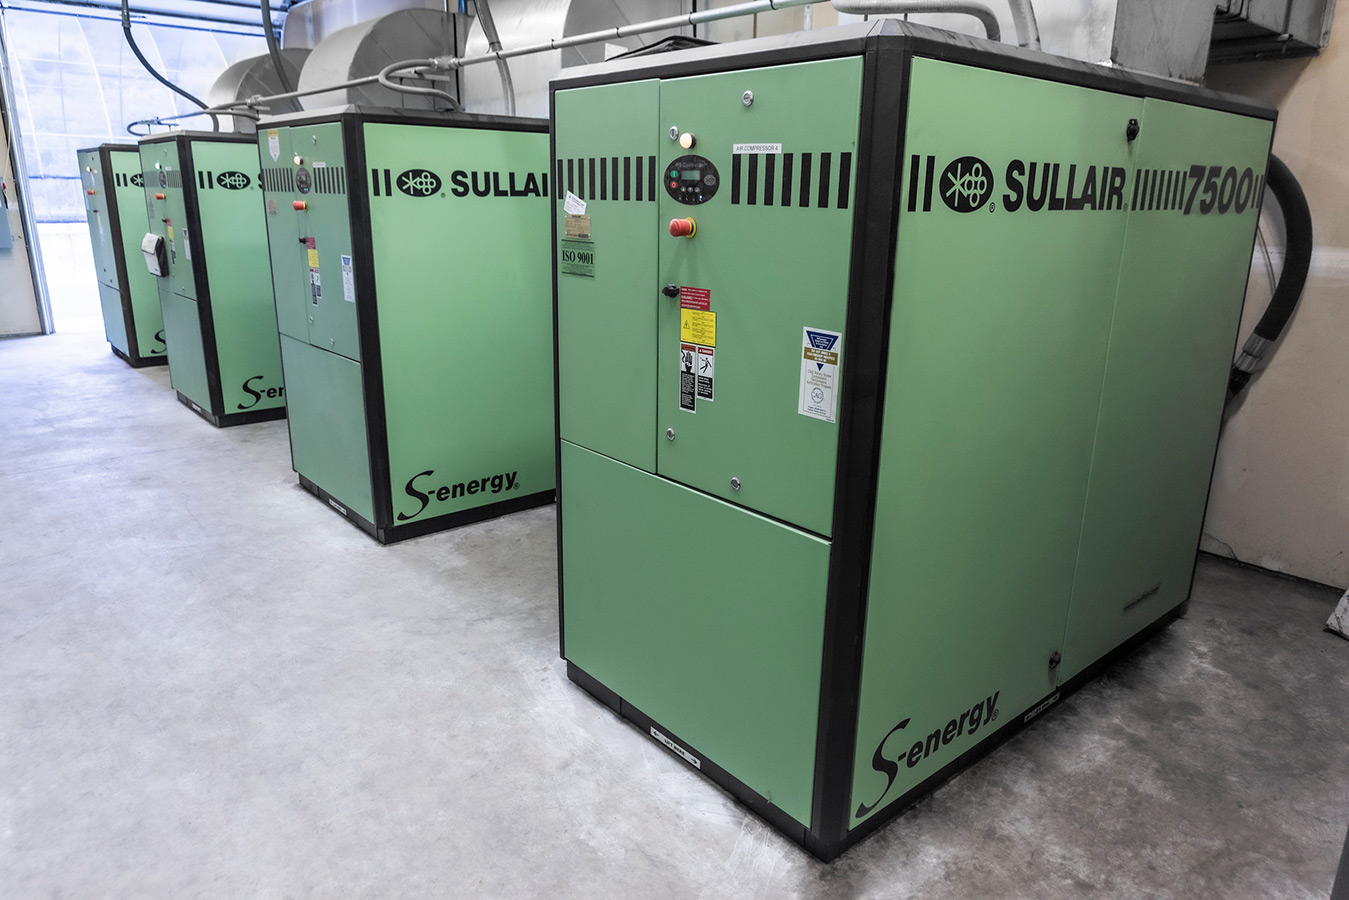 Sullair S-energy 7500 industrial air compressor installation